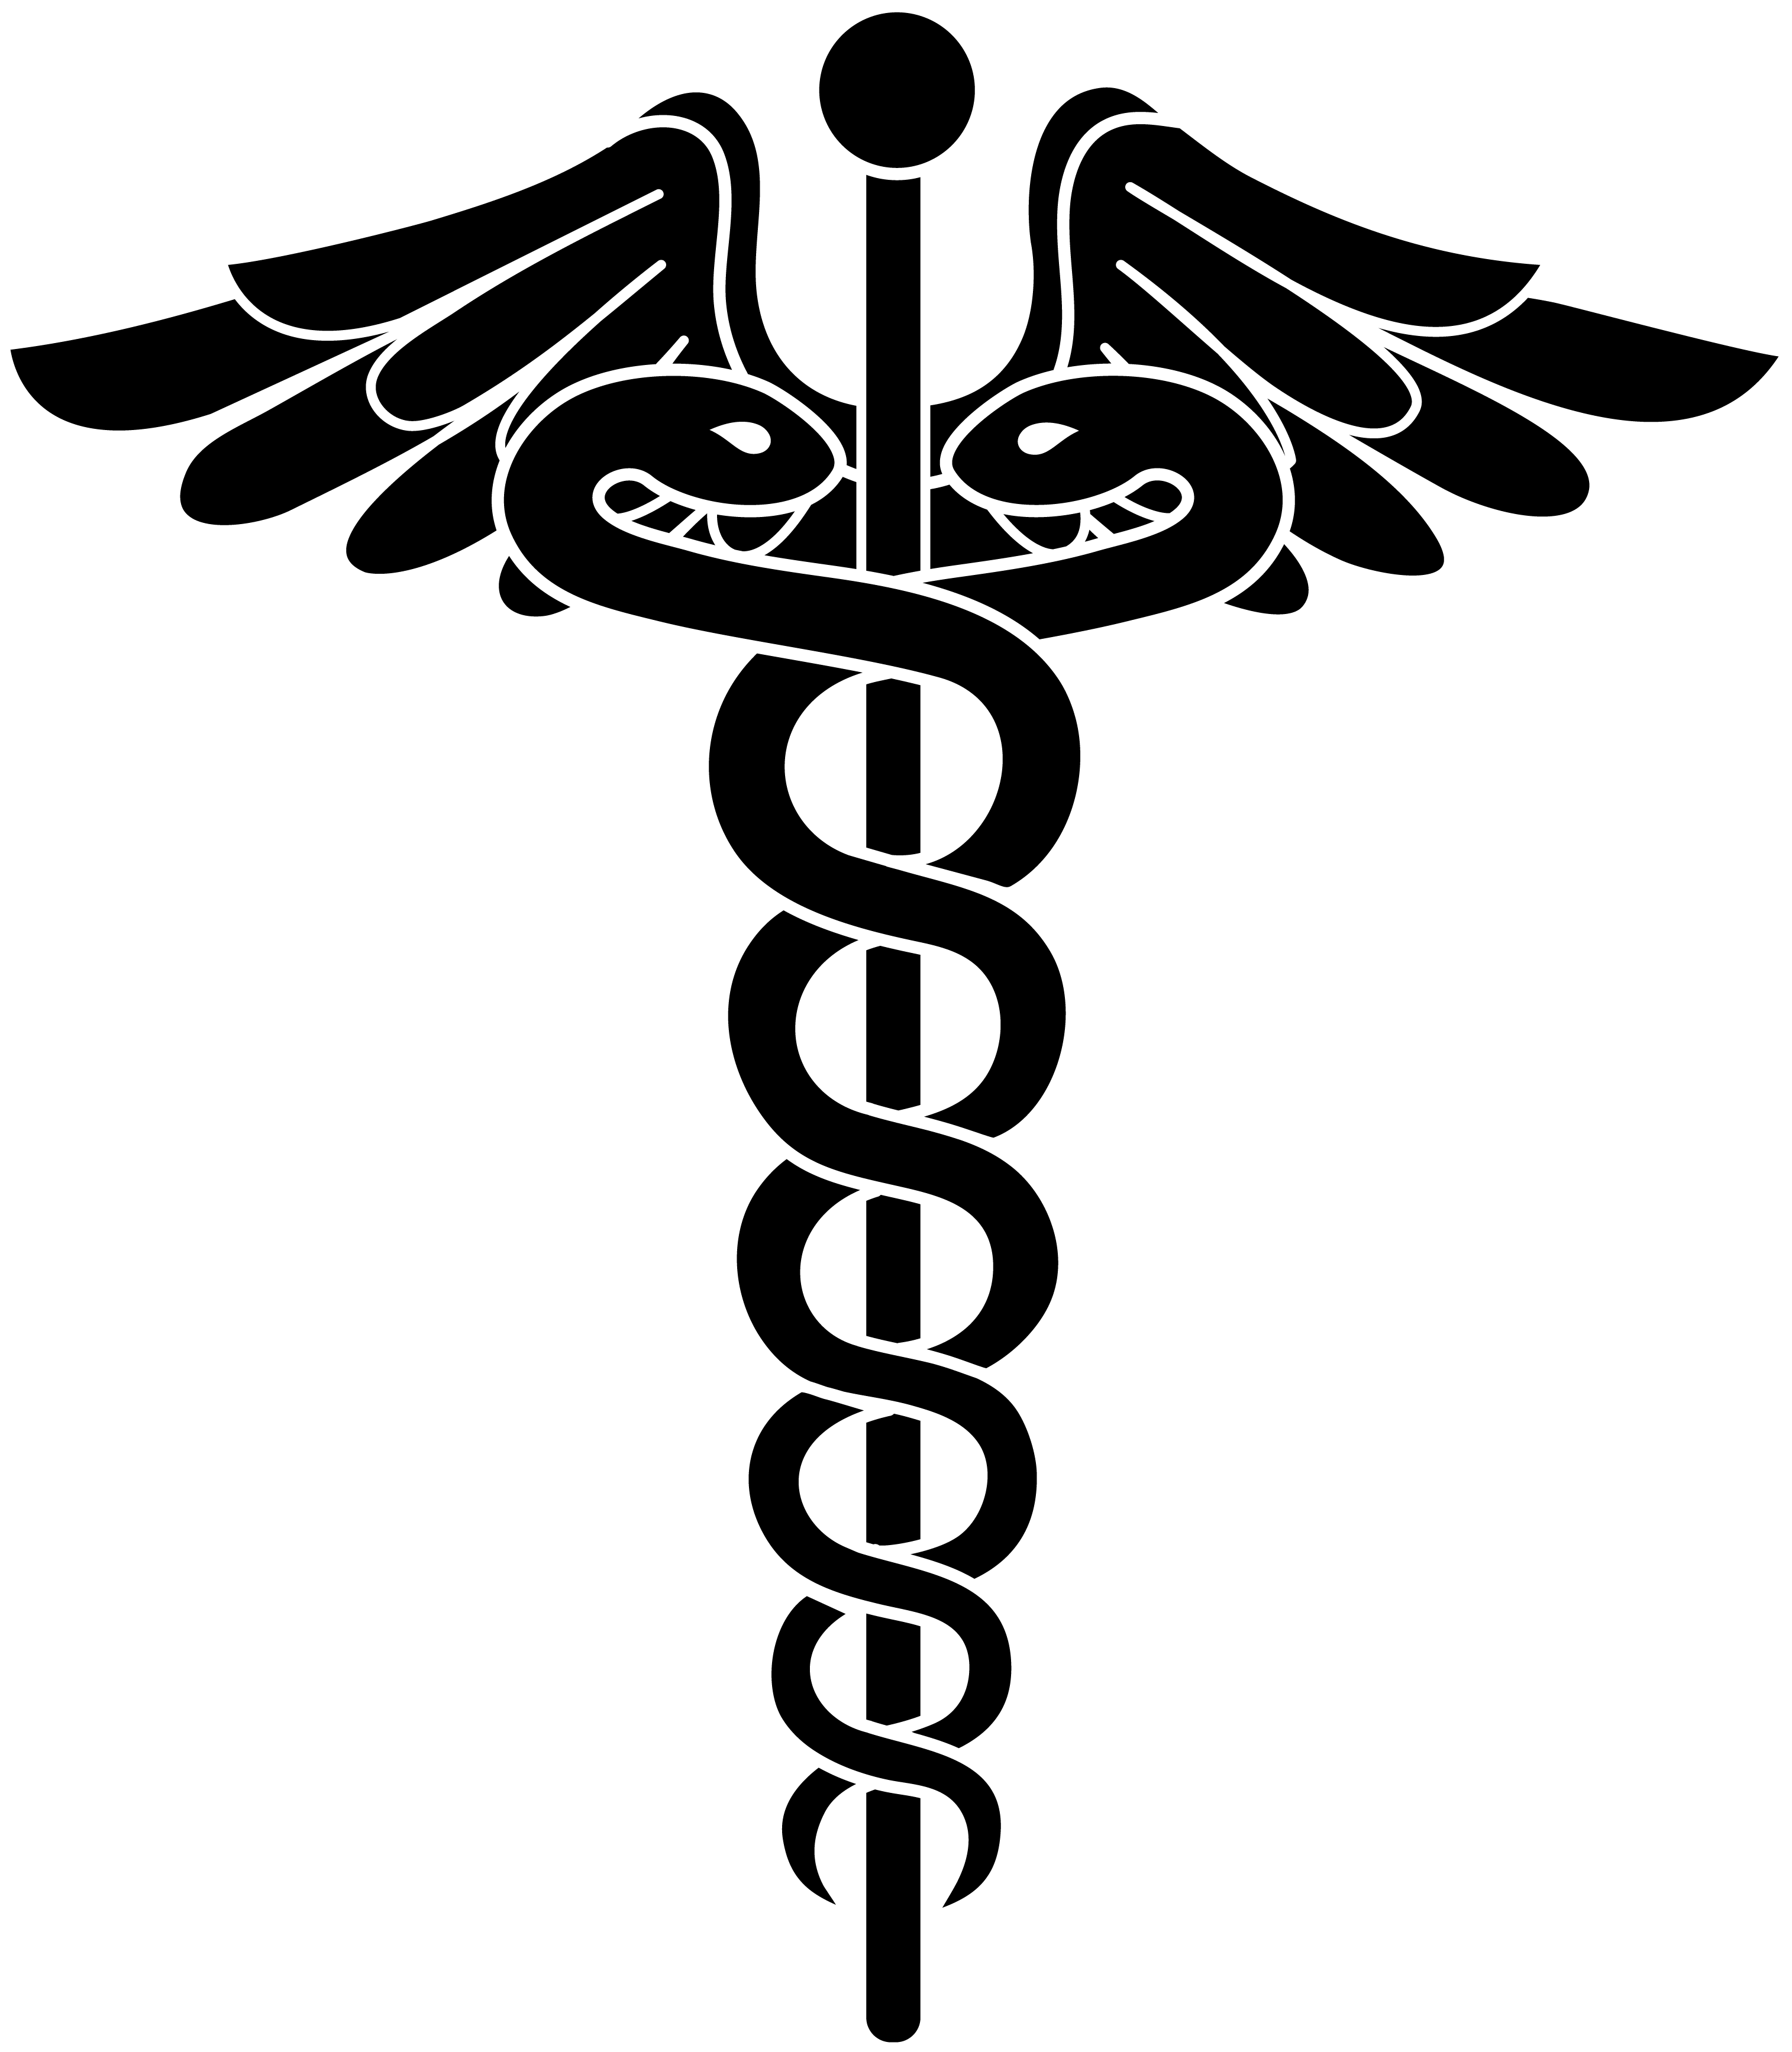 Doctors Logo Images - Physicians Logos Wallpaper